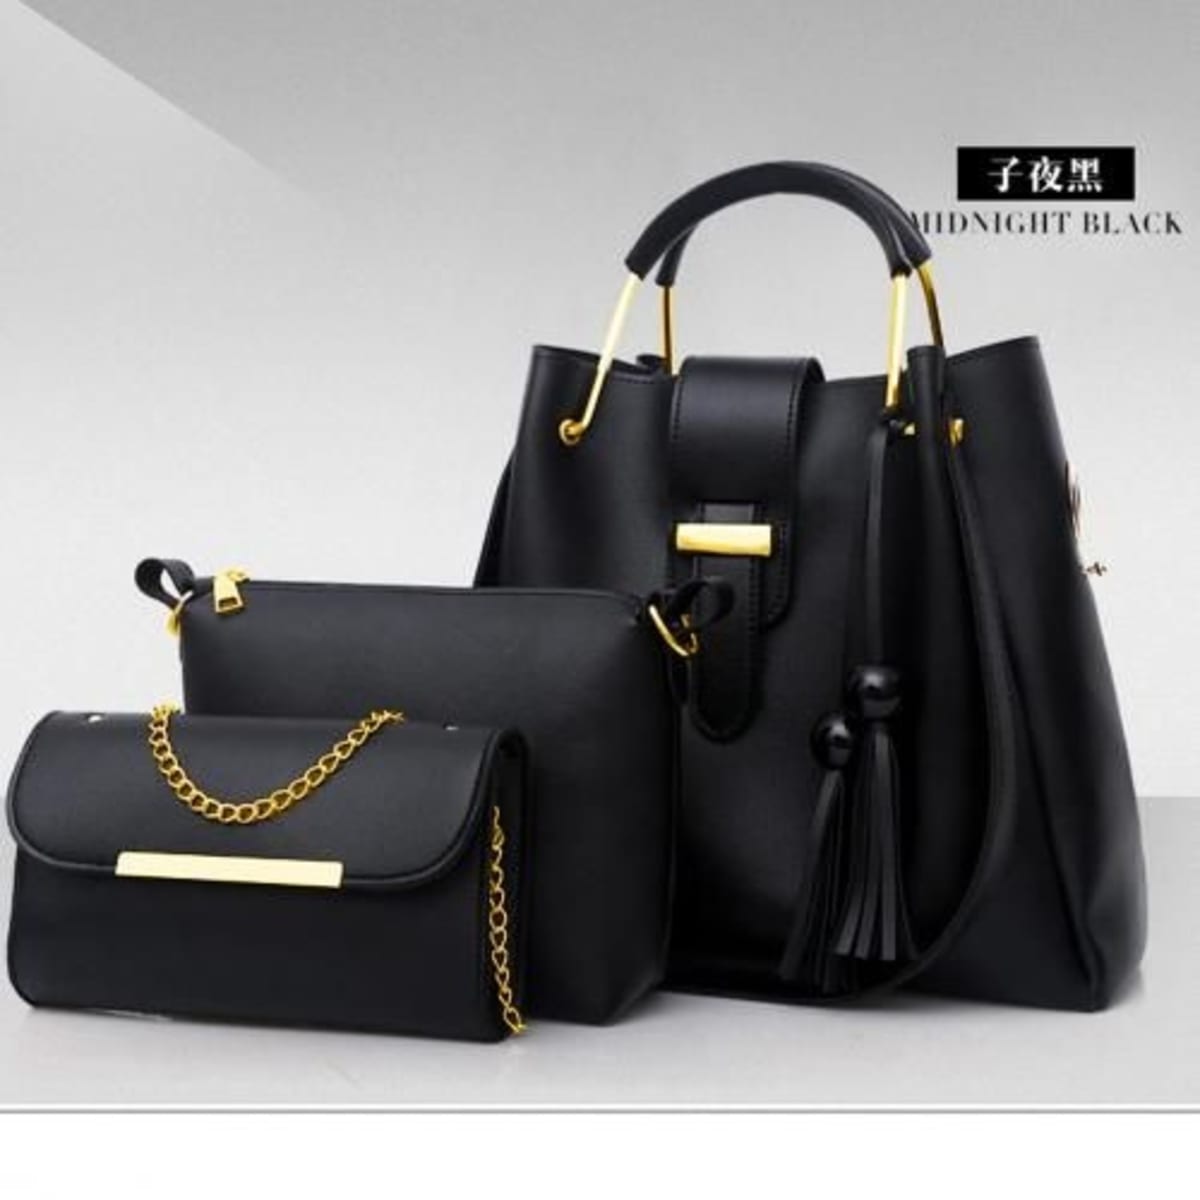 Shop Office Women Bags online | Lazada.com.ph